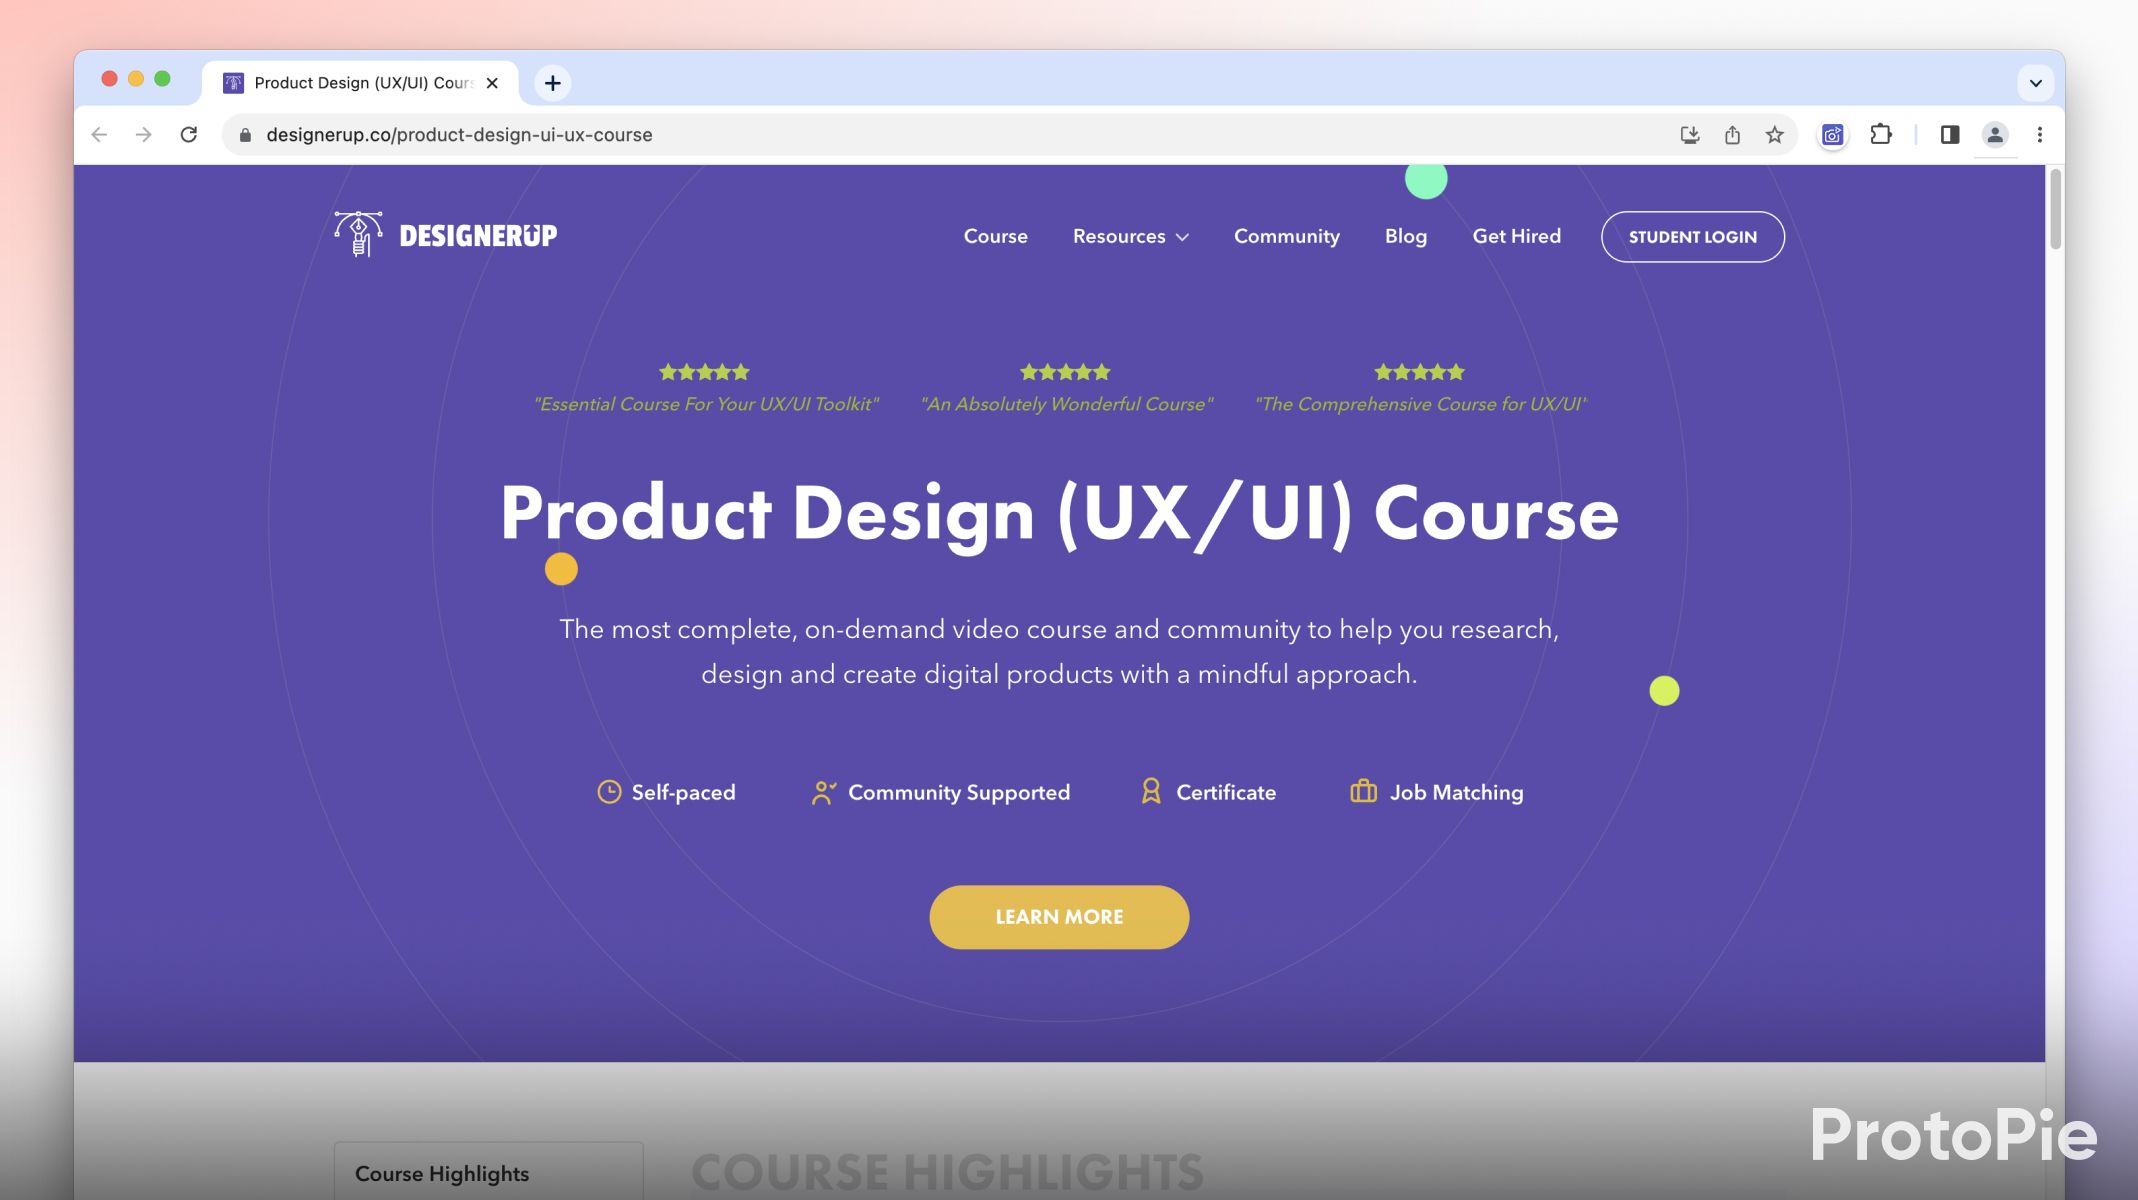 DesignerUp's Product (UX/UI) Course website